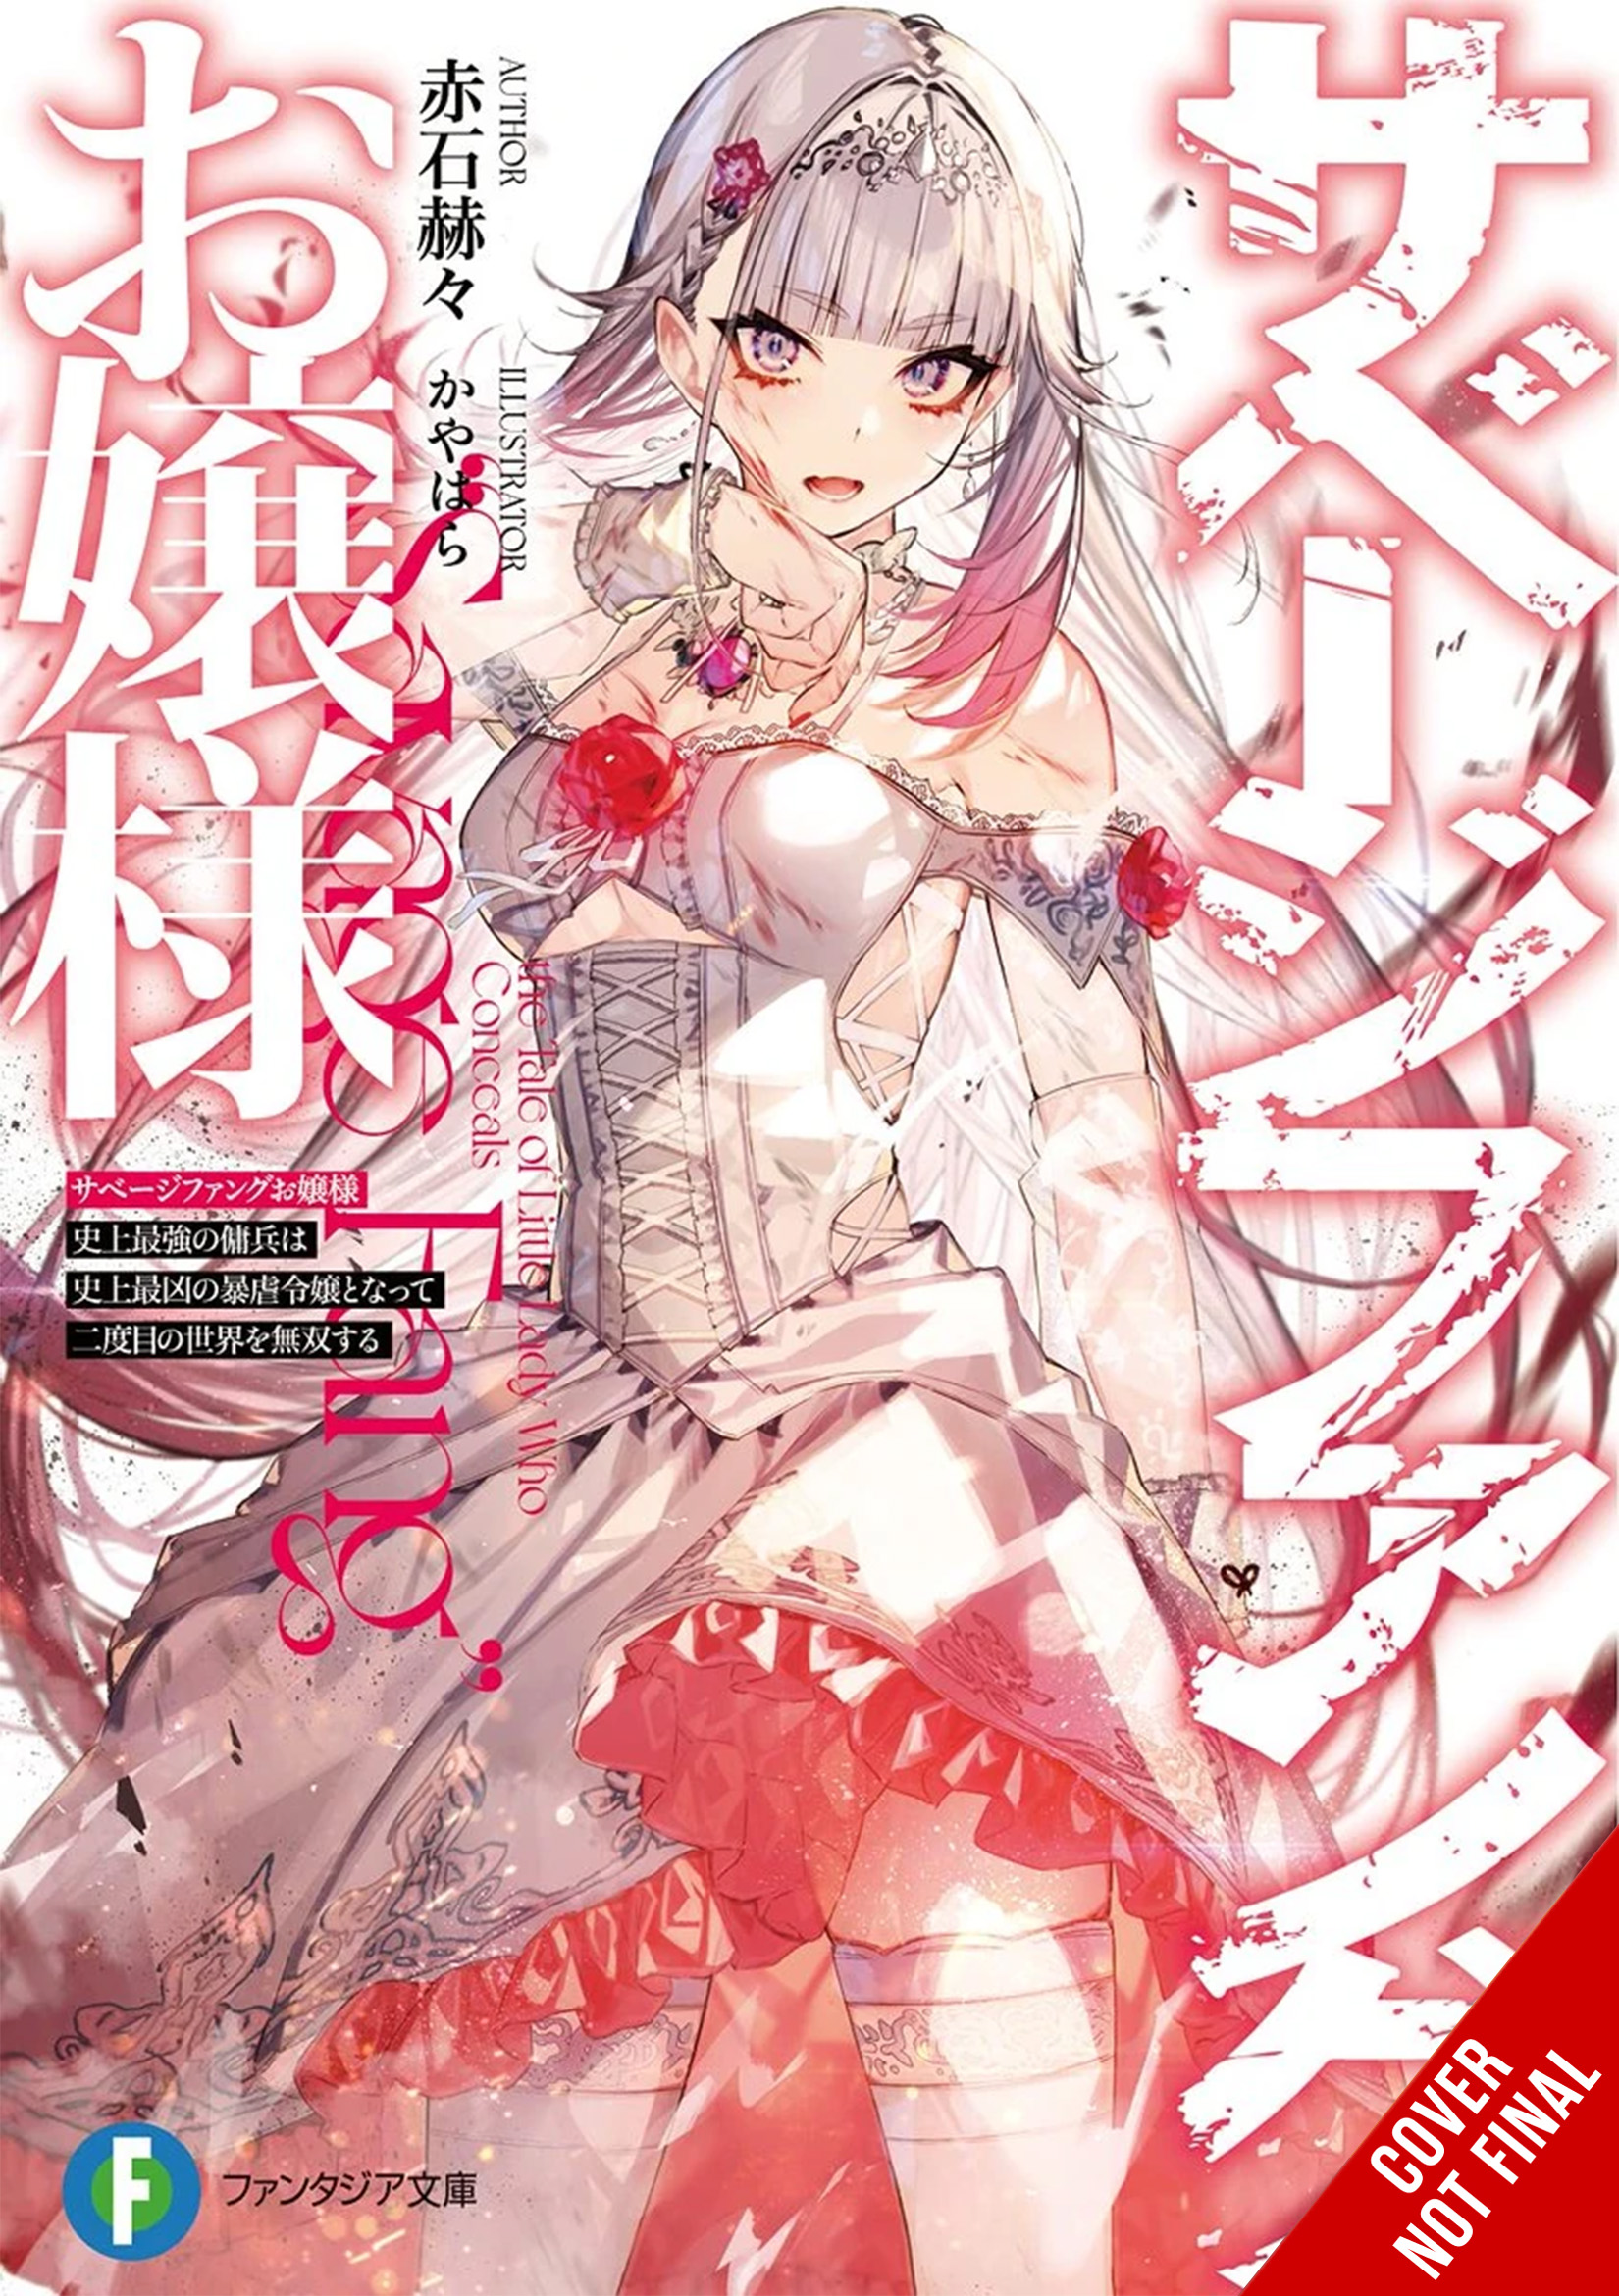 Reine des neiges II (la) - Manga série - Manga news